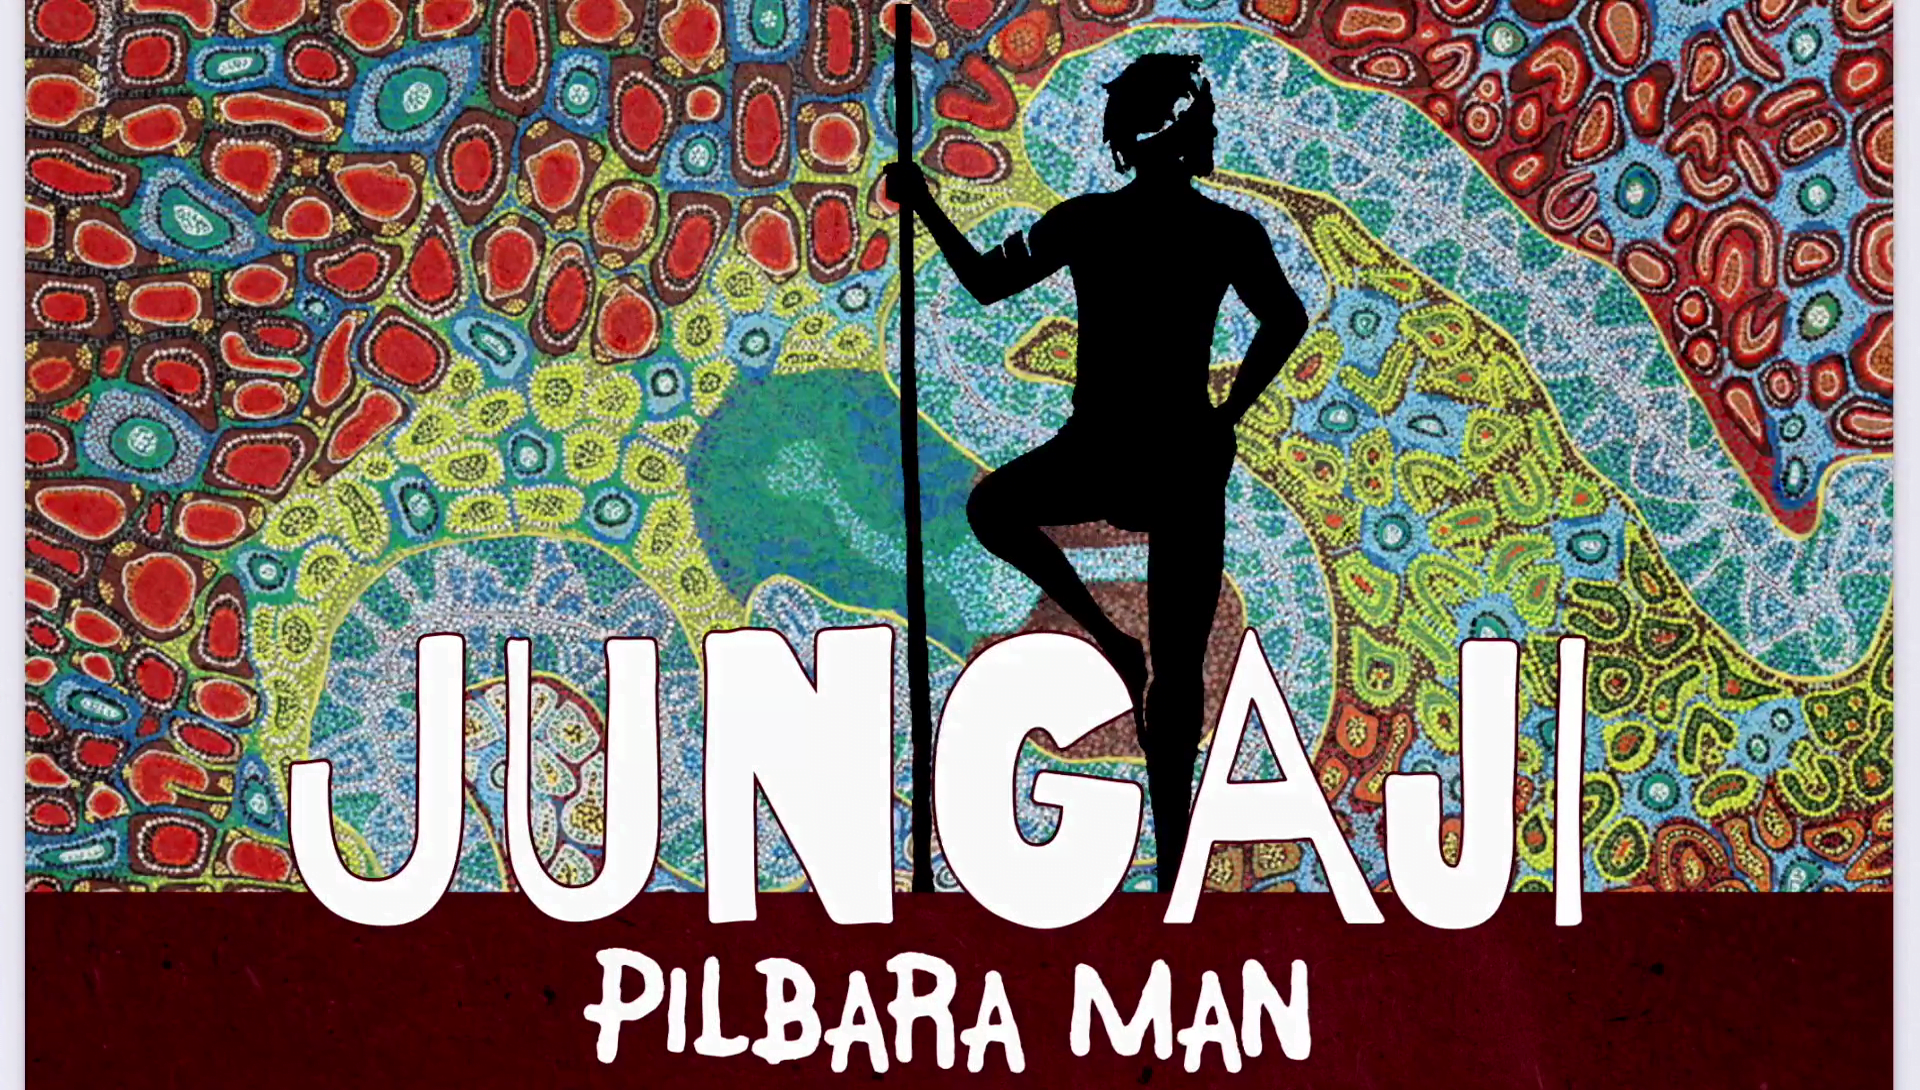 Pilbara-man-thumbnail.png